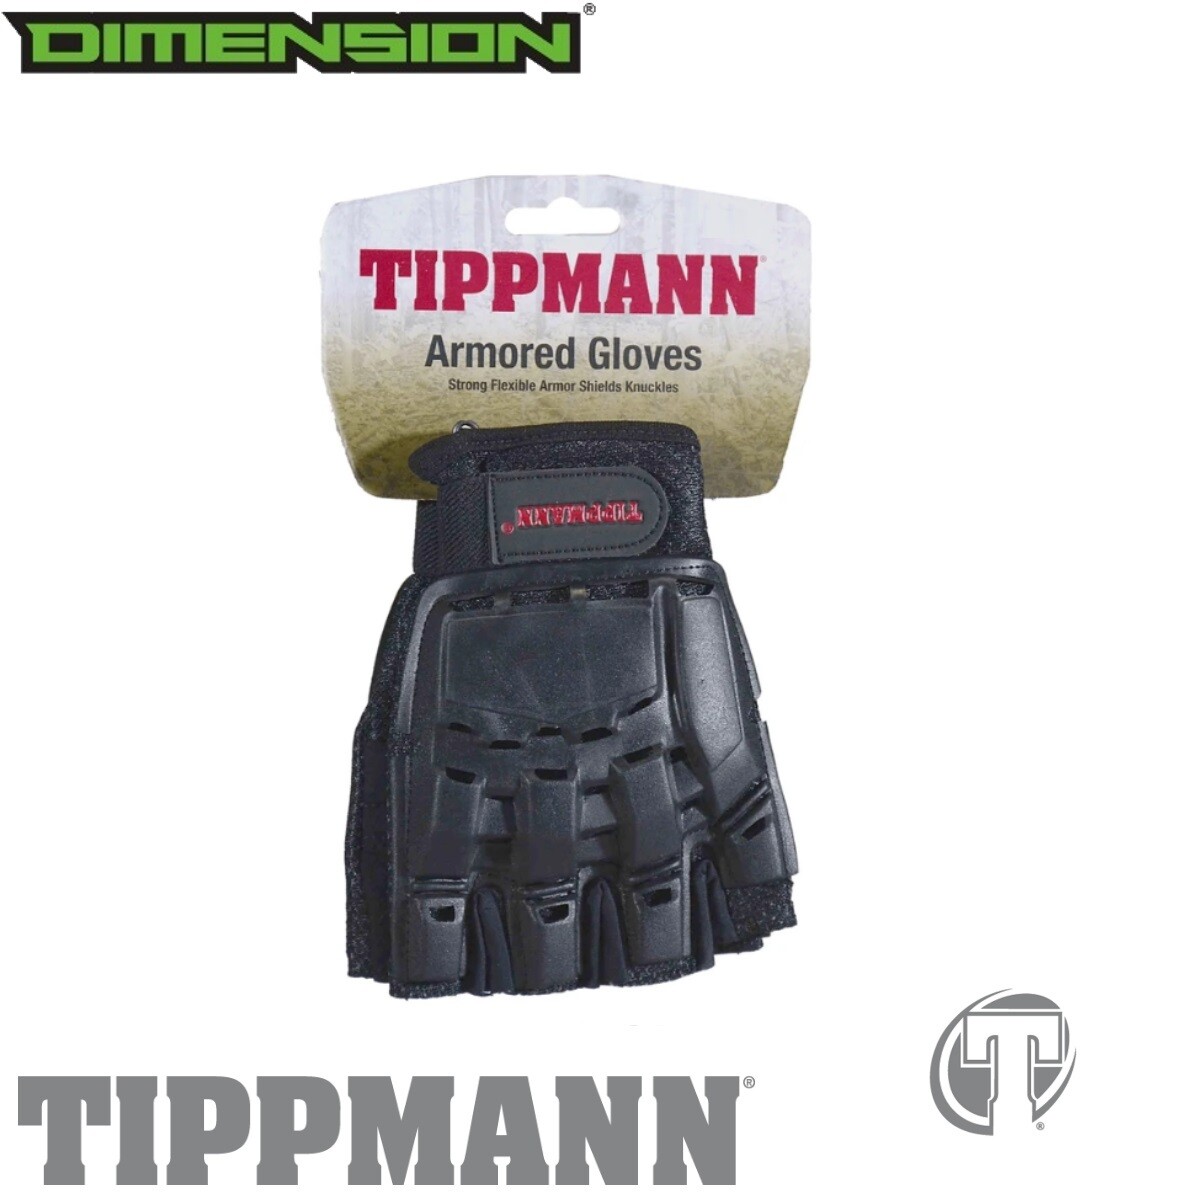 Tippmann Armored Gloves - Small